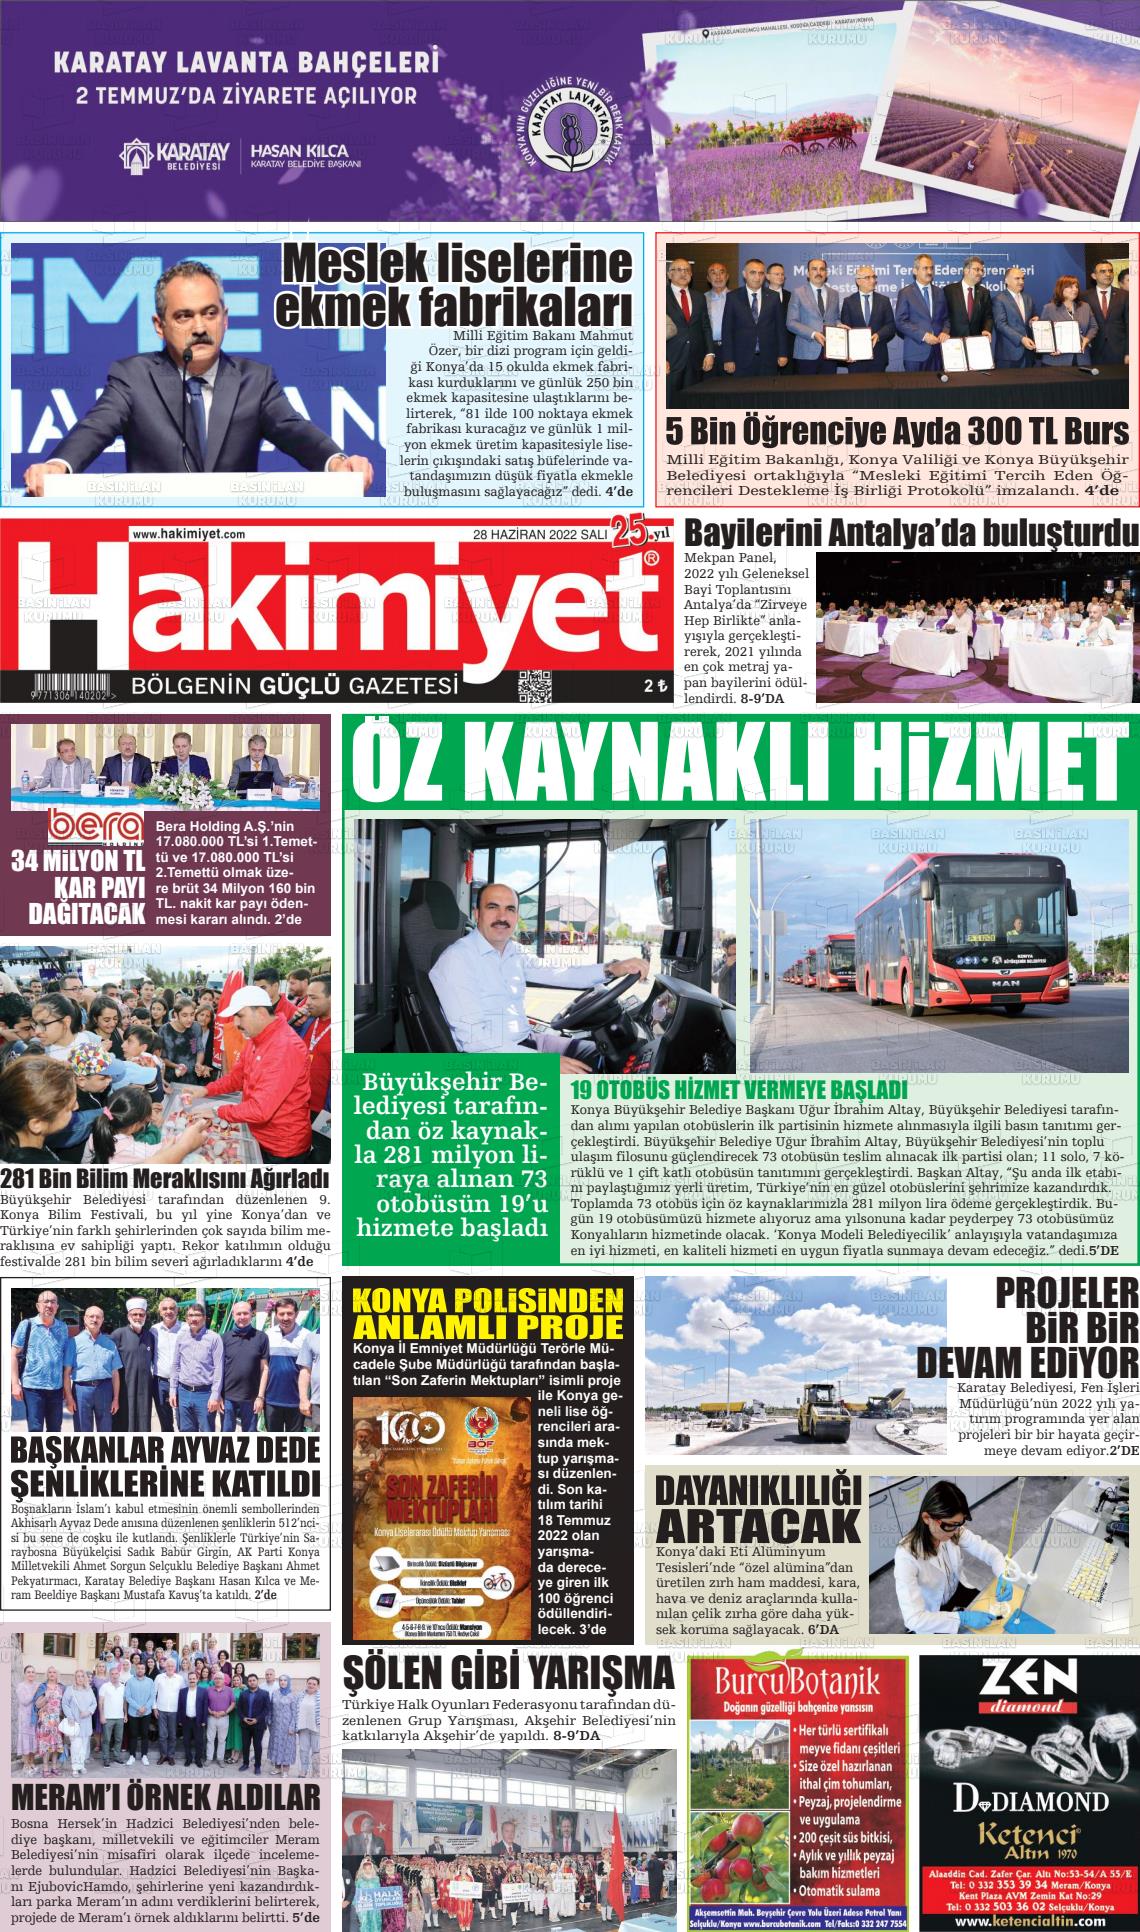 28 Haziran 2022 Konya Hakimiyet Gazete Manşeti